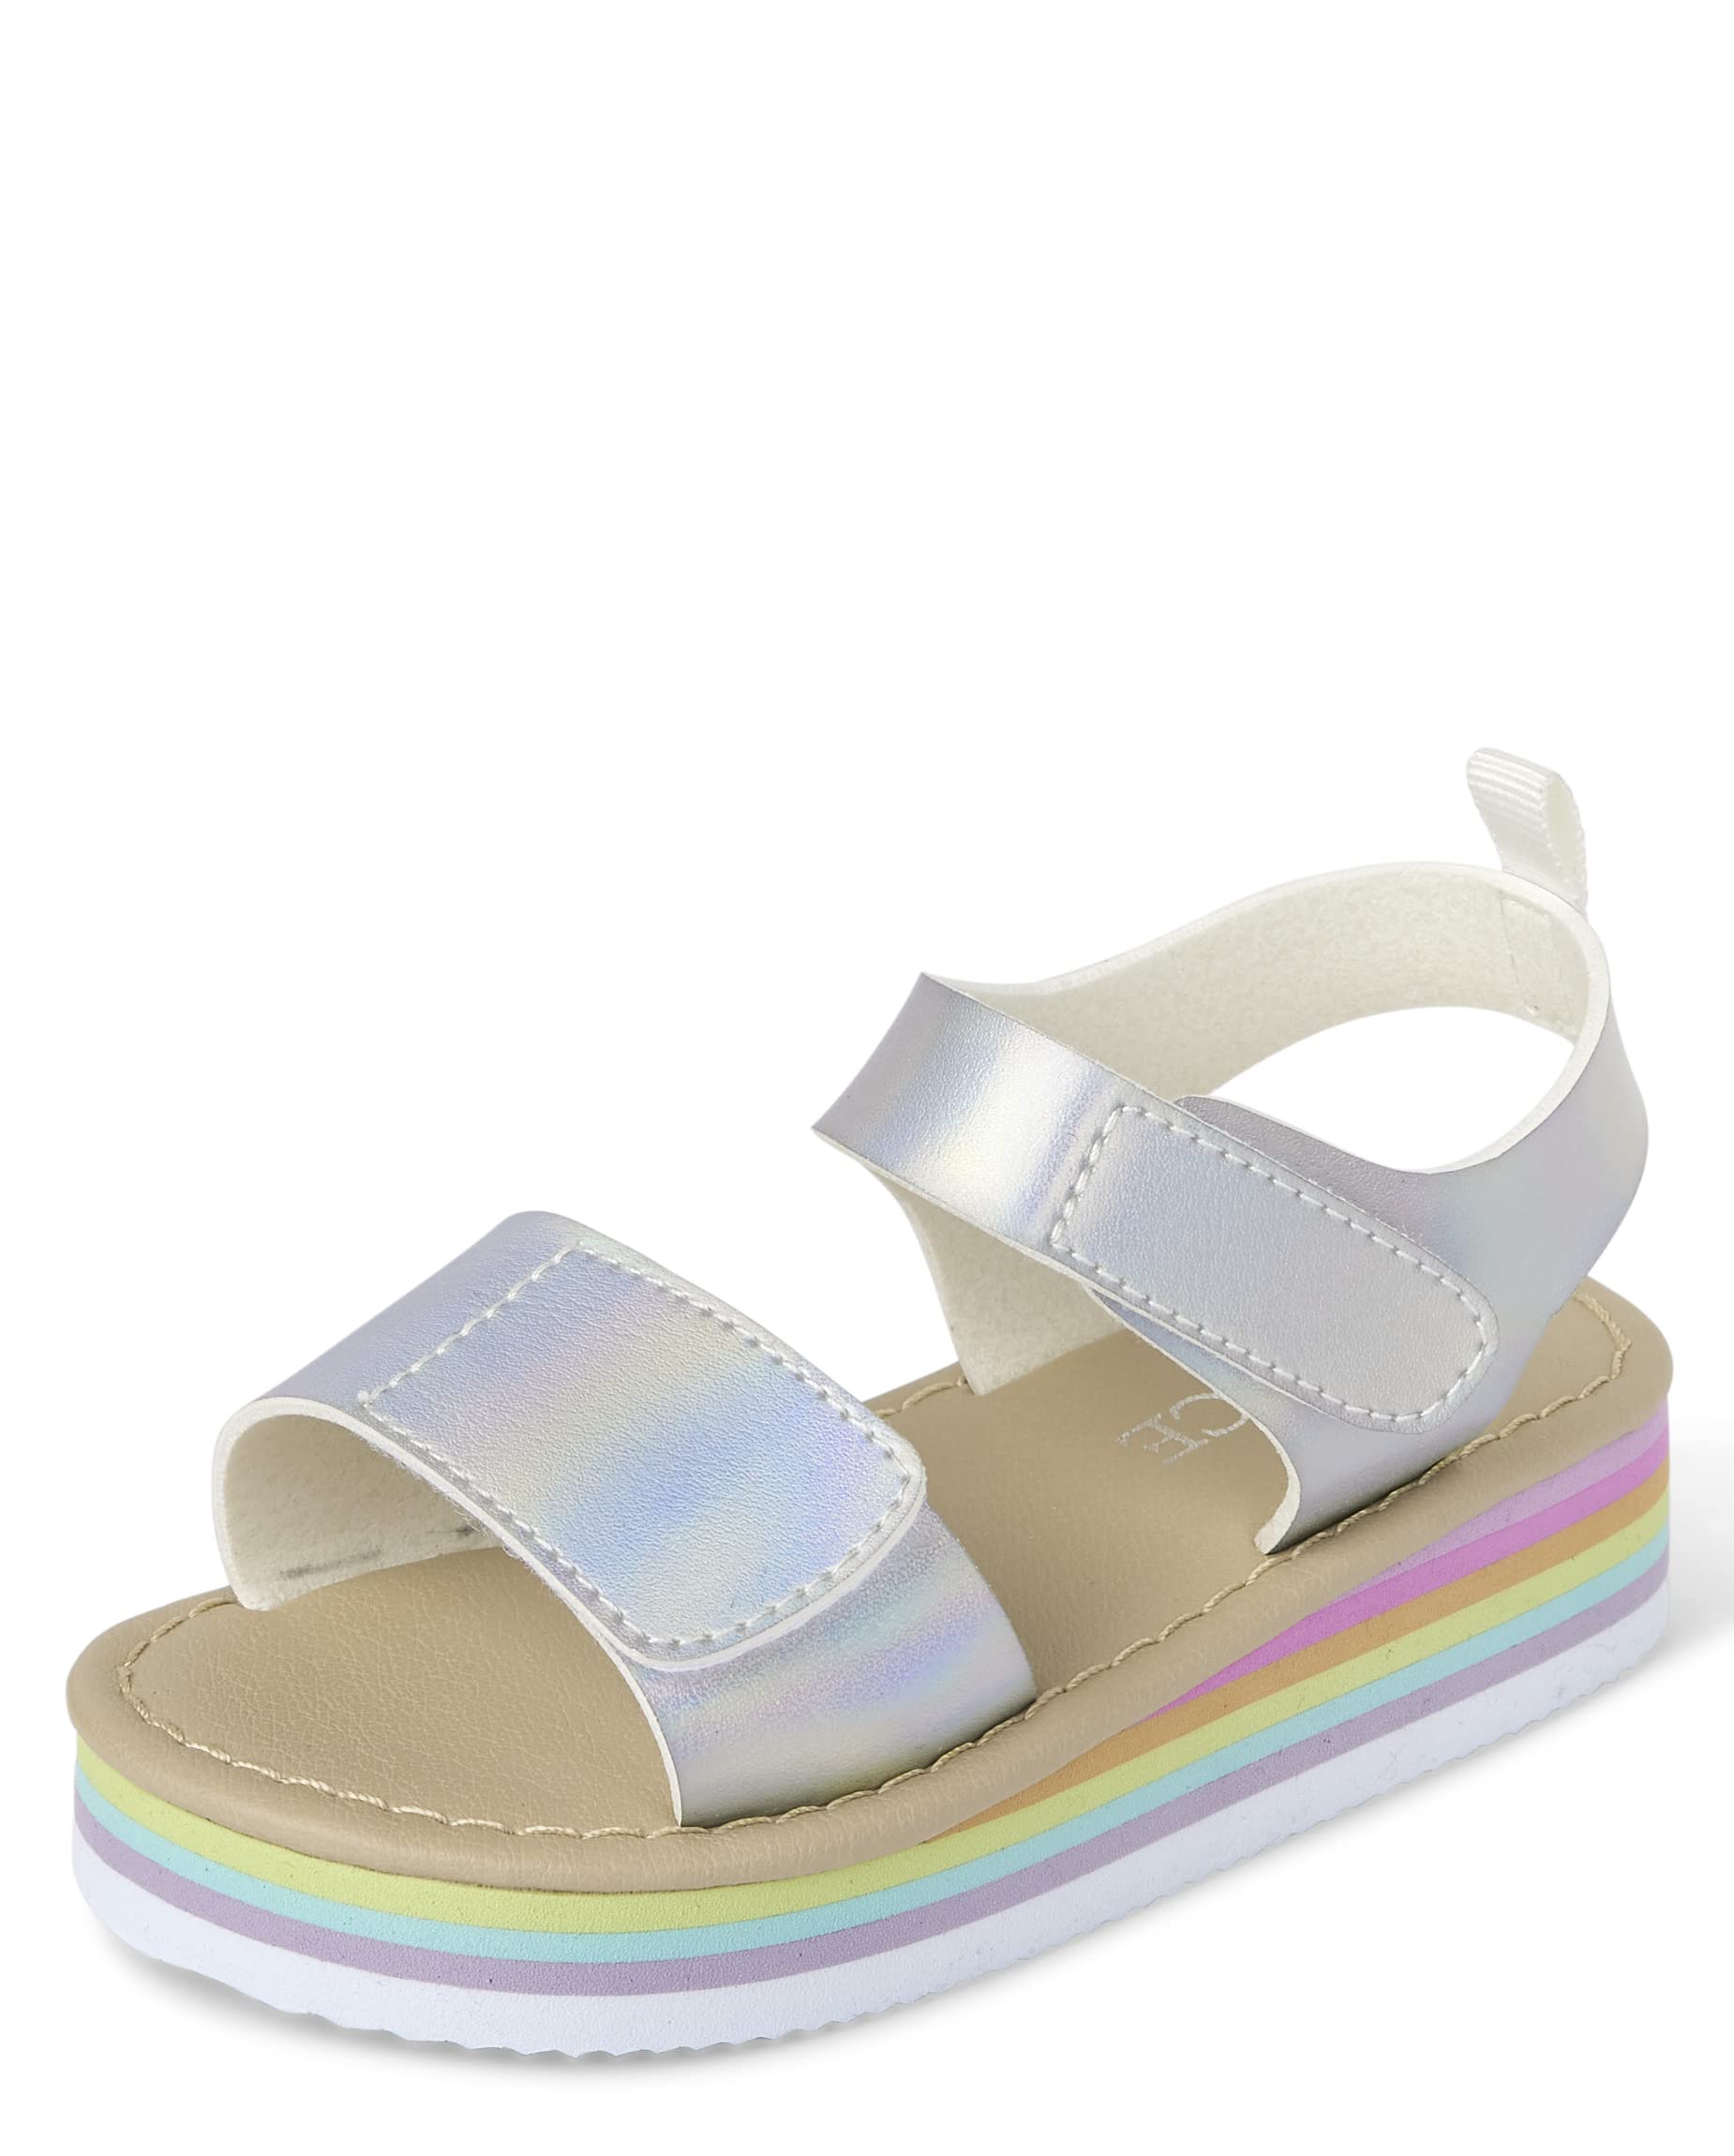 The Children's Place Unisex-Child and Toddler Girls Platform Sandals